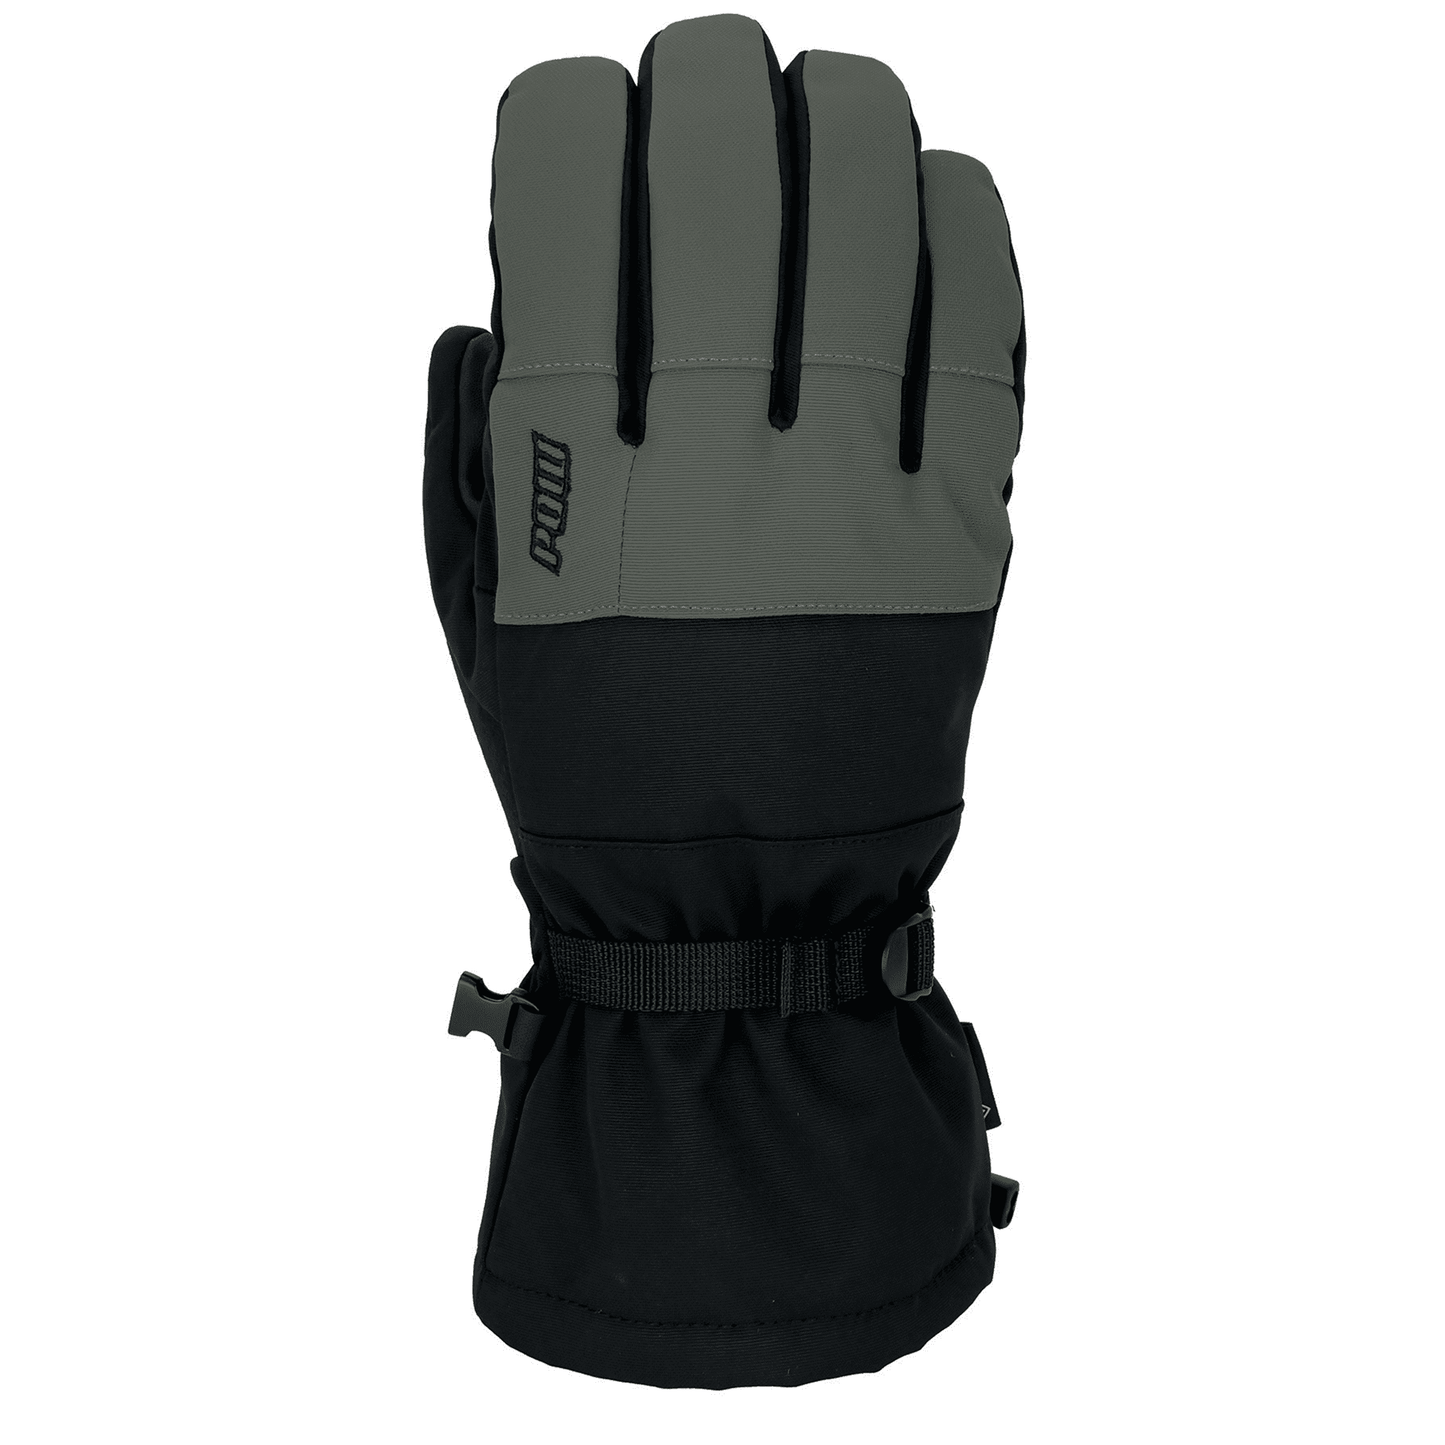 POW Gloves - Trench GTX Ski / Snowboard Glove